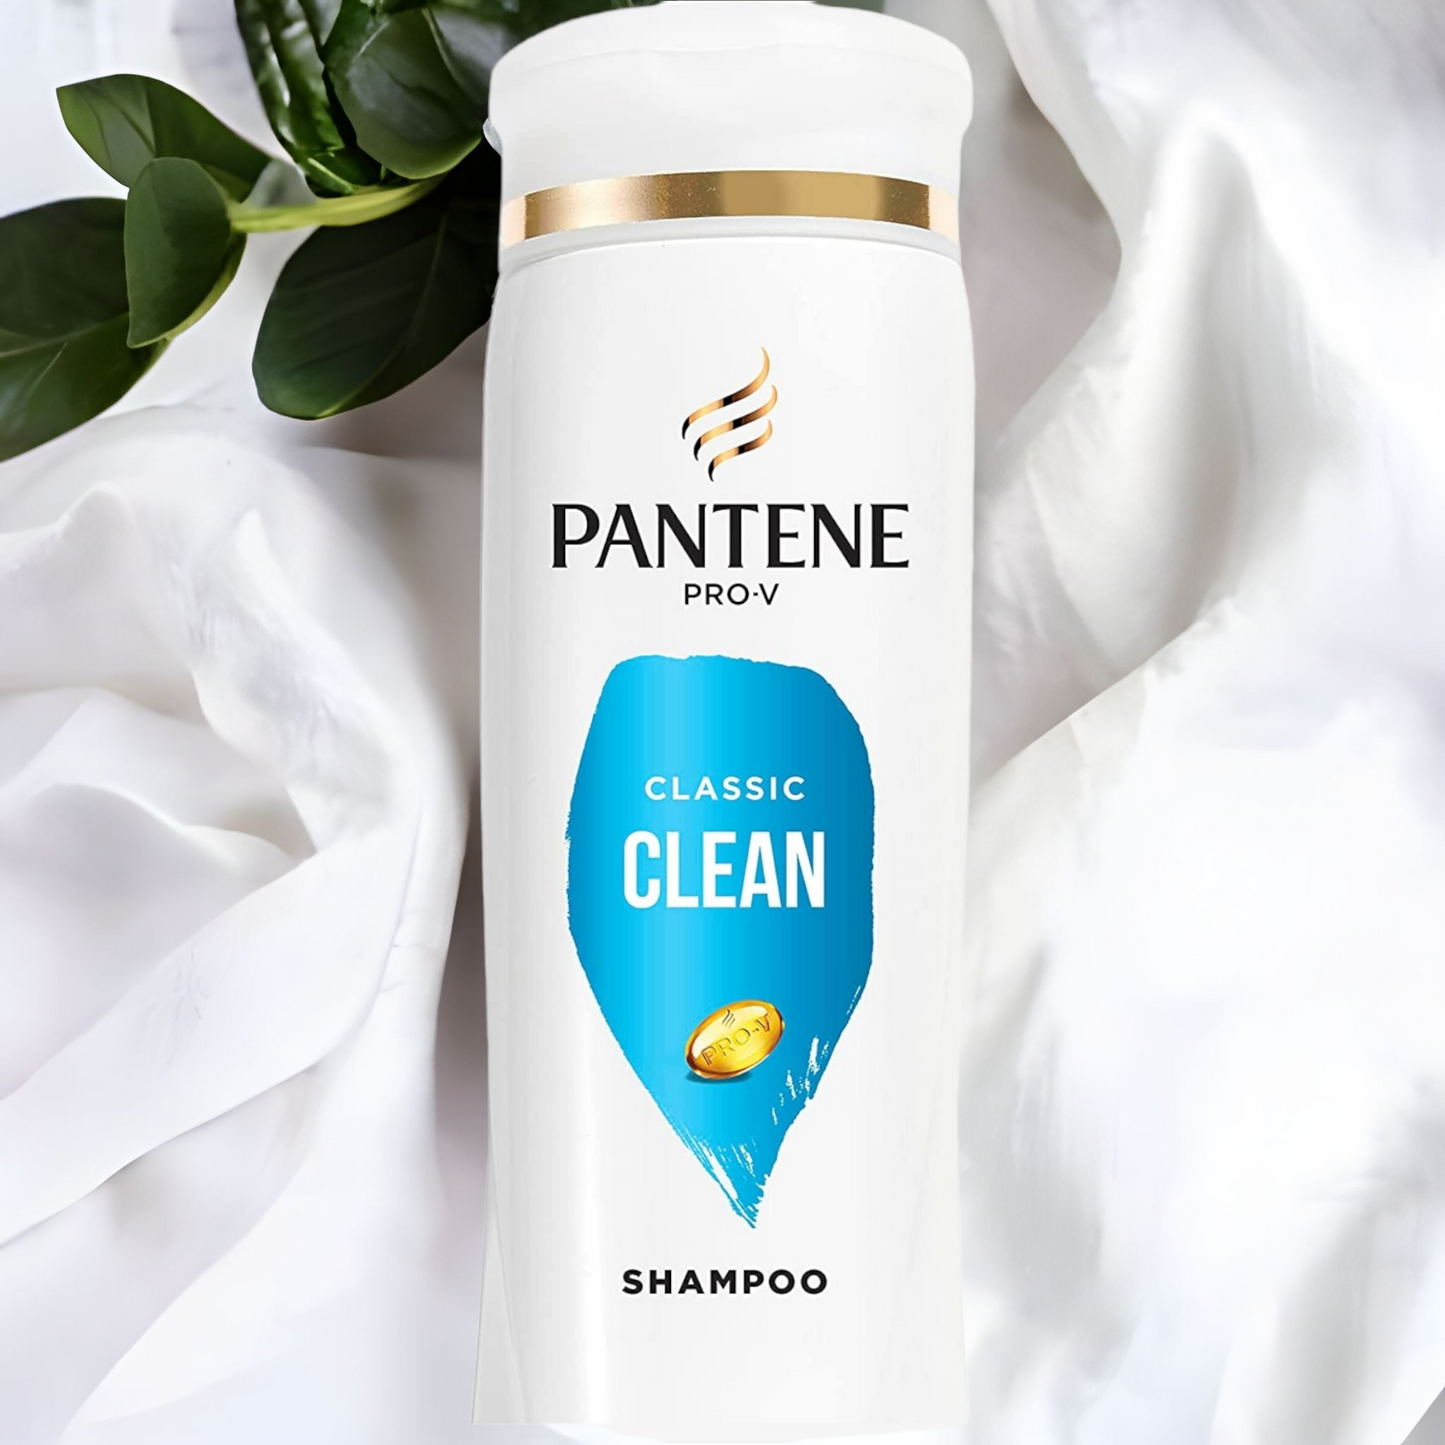 Pantene Cupid Beauty Supplies Shampoo Pantene Pro-V Classic Clean Shampoo